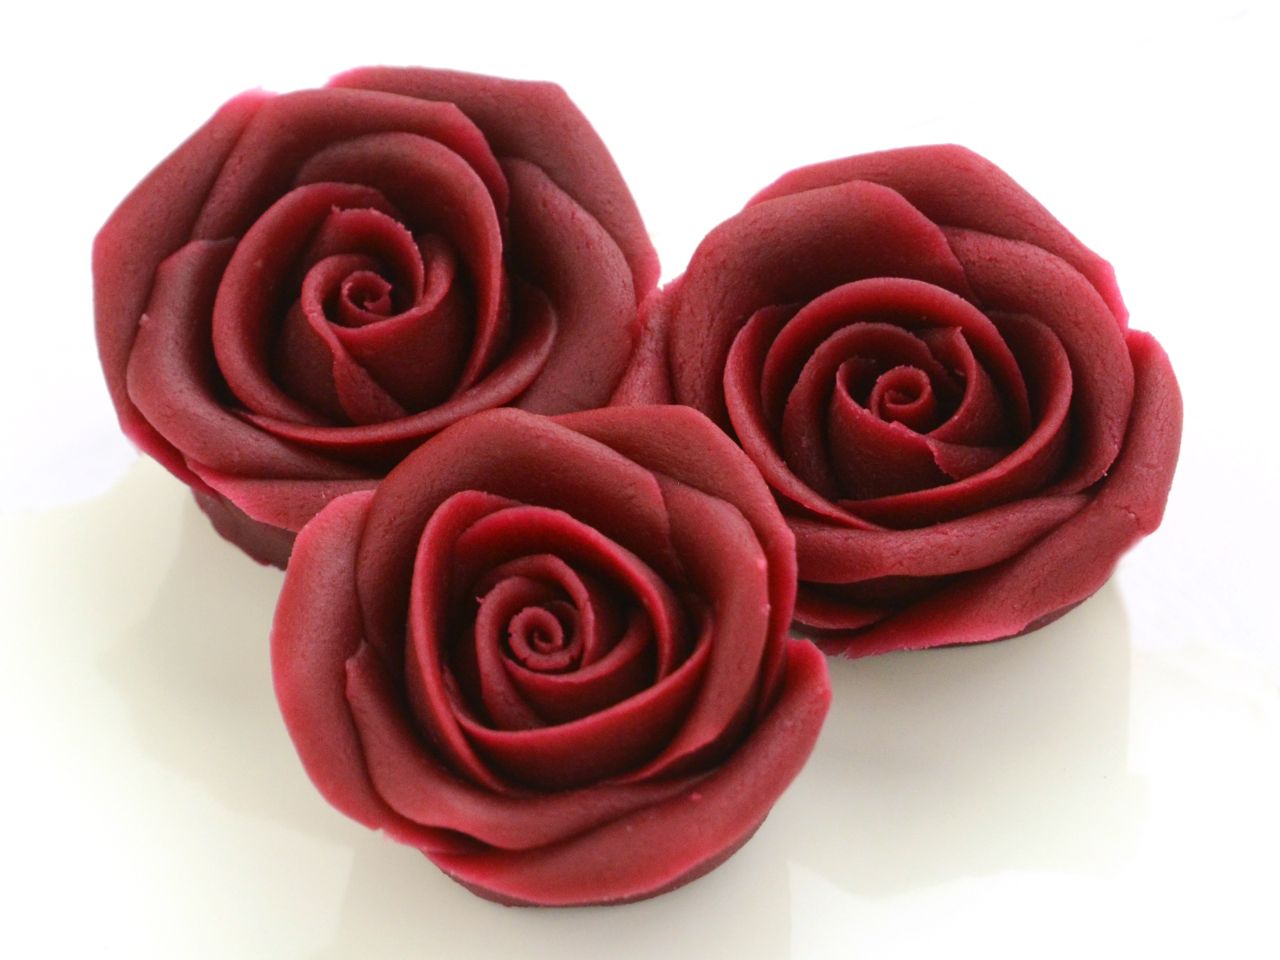 Große Marzipan-Rosen, Bordeaux-Rot, 2 Stück, 4,5 x 2,5 cm